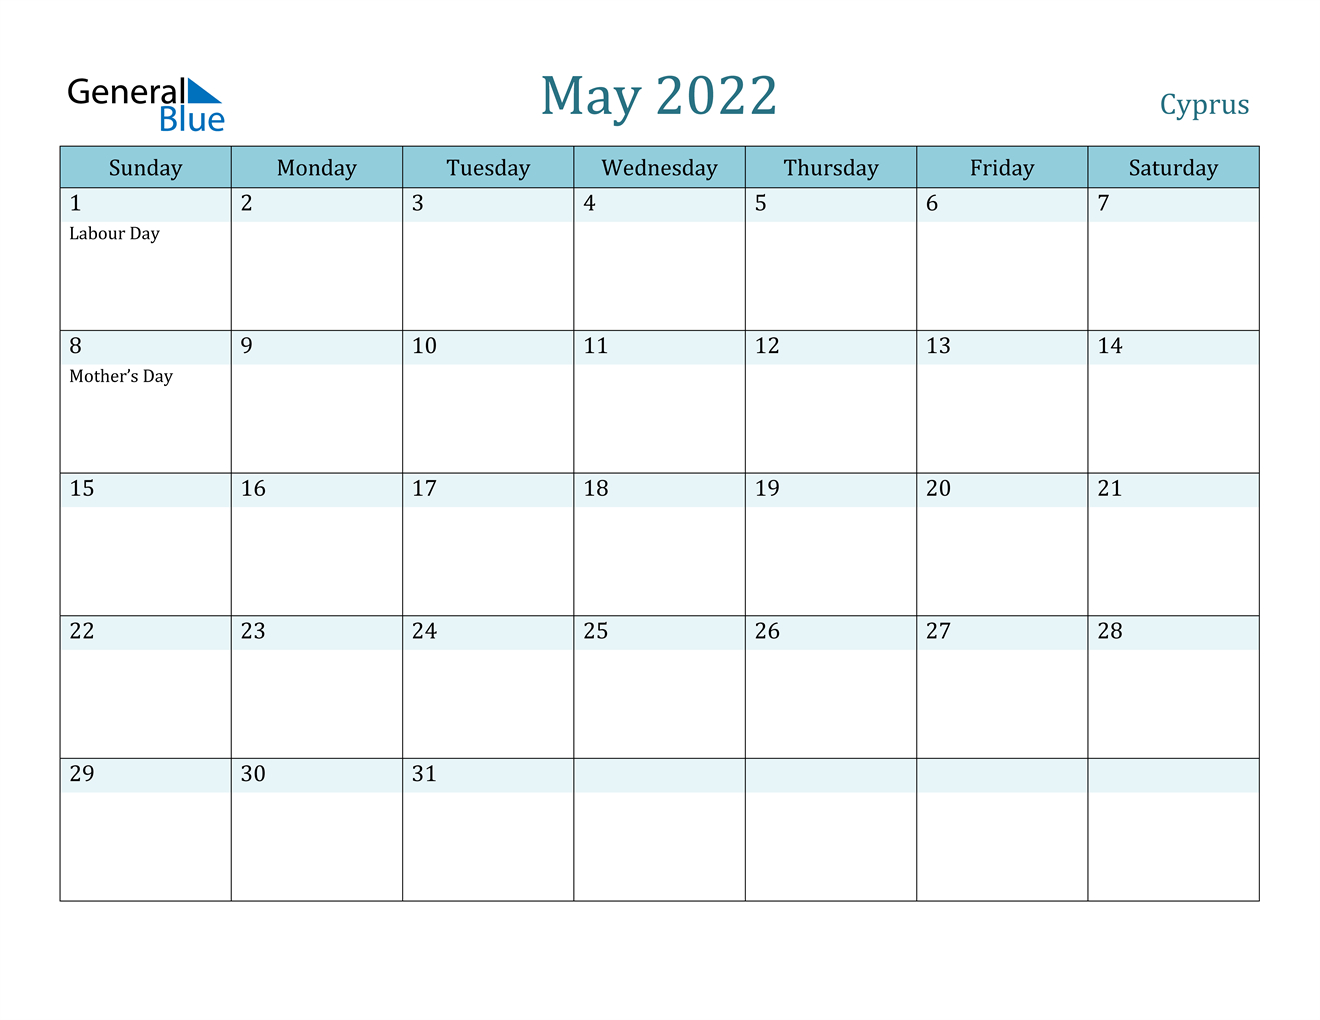 May 2022 Calendar - Cyprus  Free Printable Calendar 2022 May